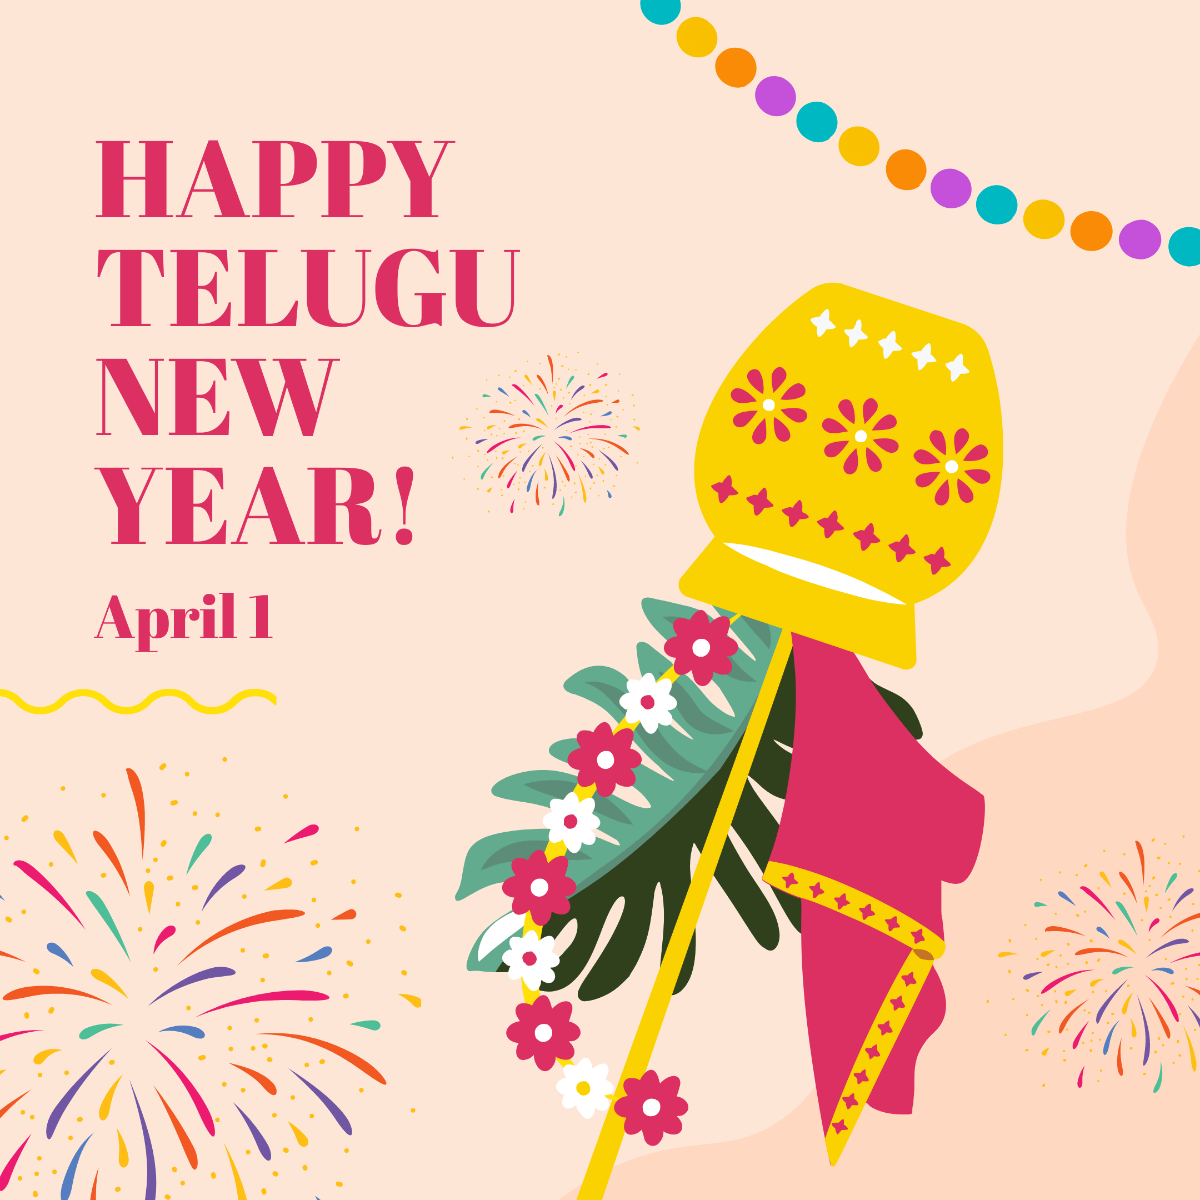 Happy Telugu New Year Instagram Post